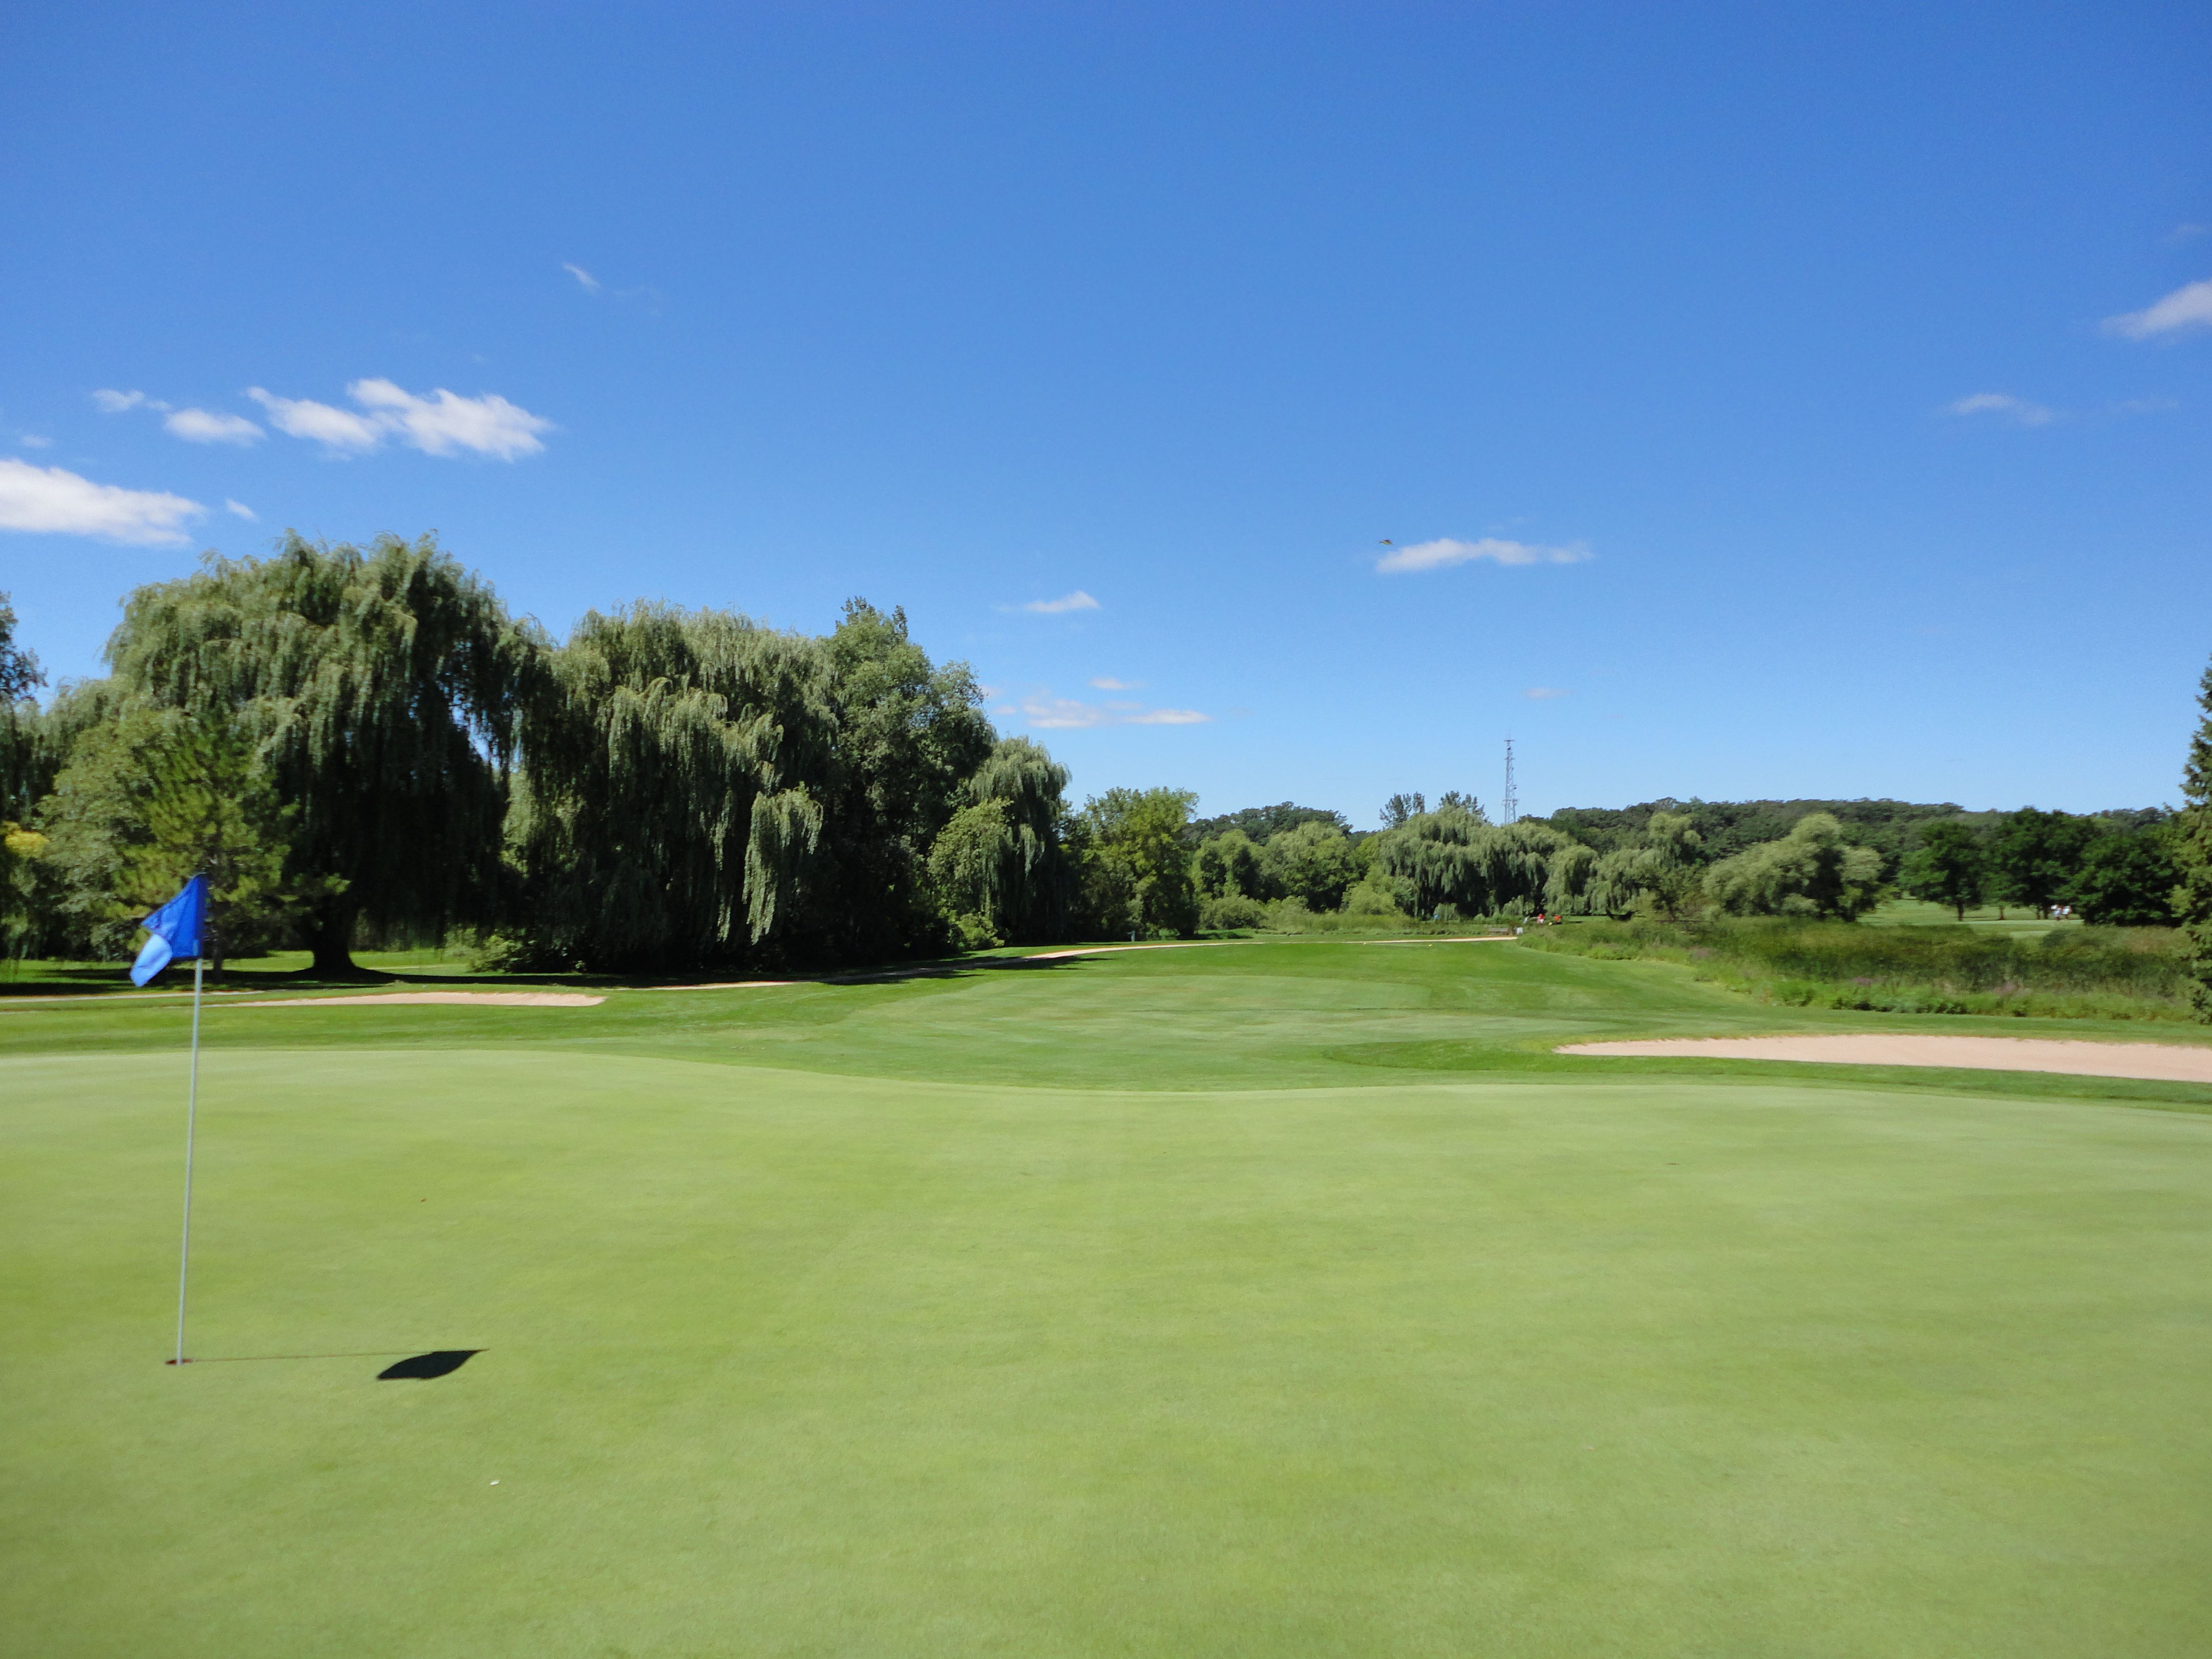 Braemar Golf Course - 4